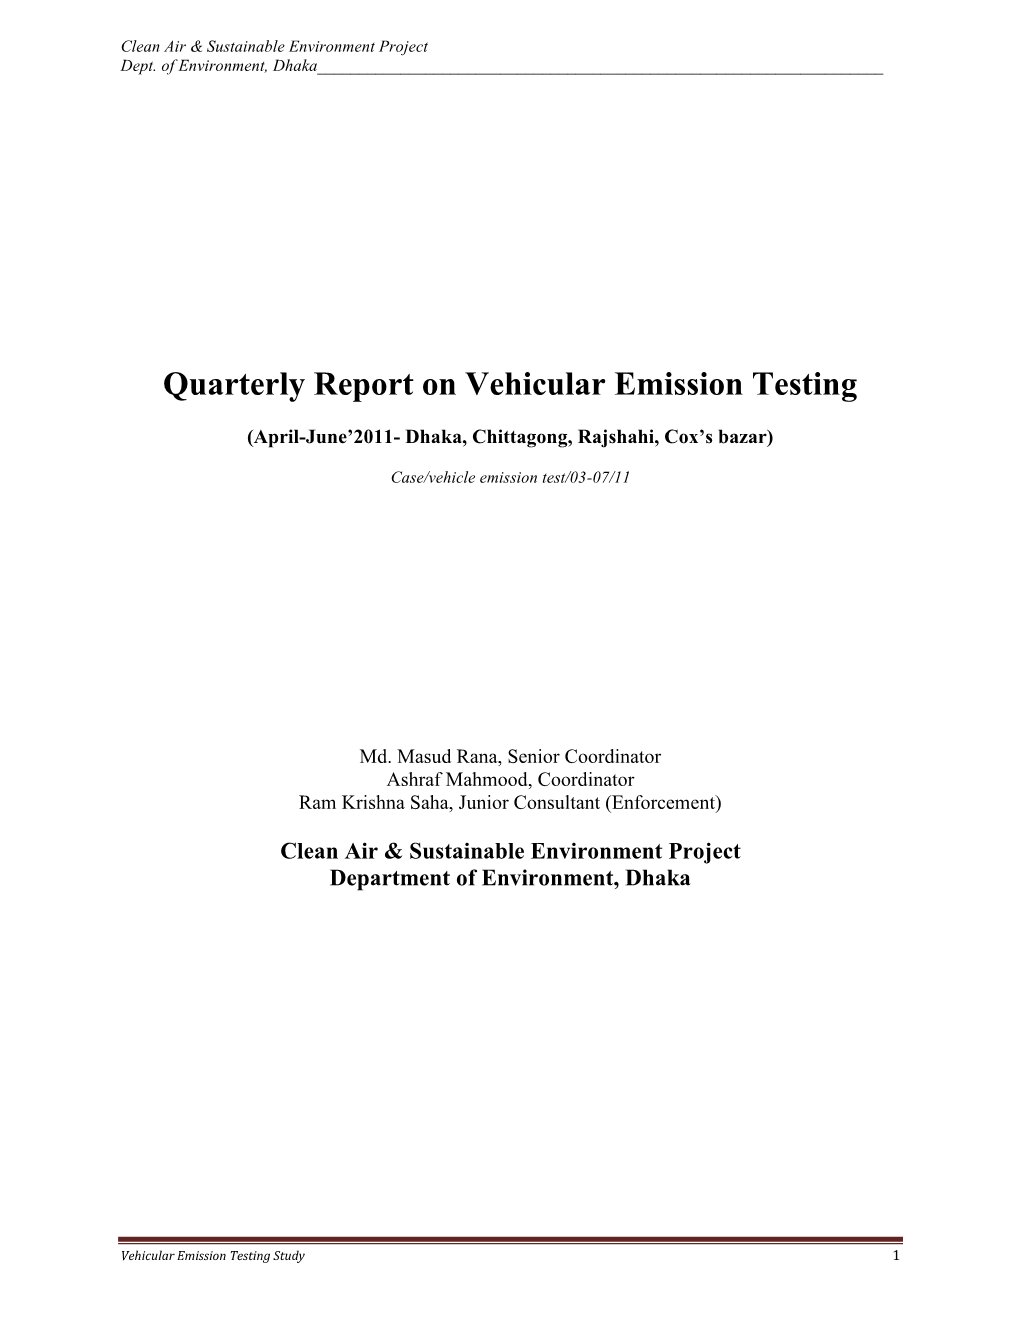 Quarterly Report on Vehicular Emission Testing